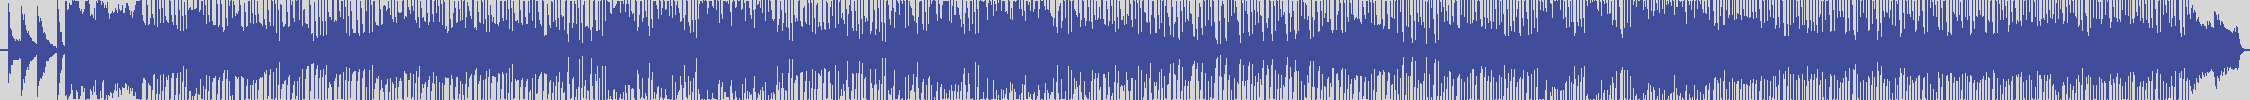 upr [UPR025] Kord - Being Boiled [Live In Studio Version] audio wave form